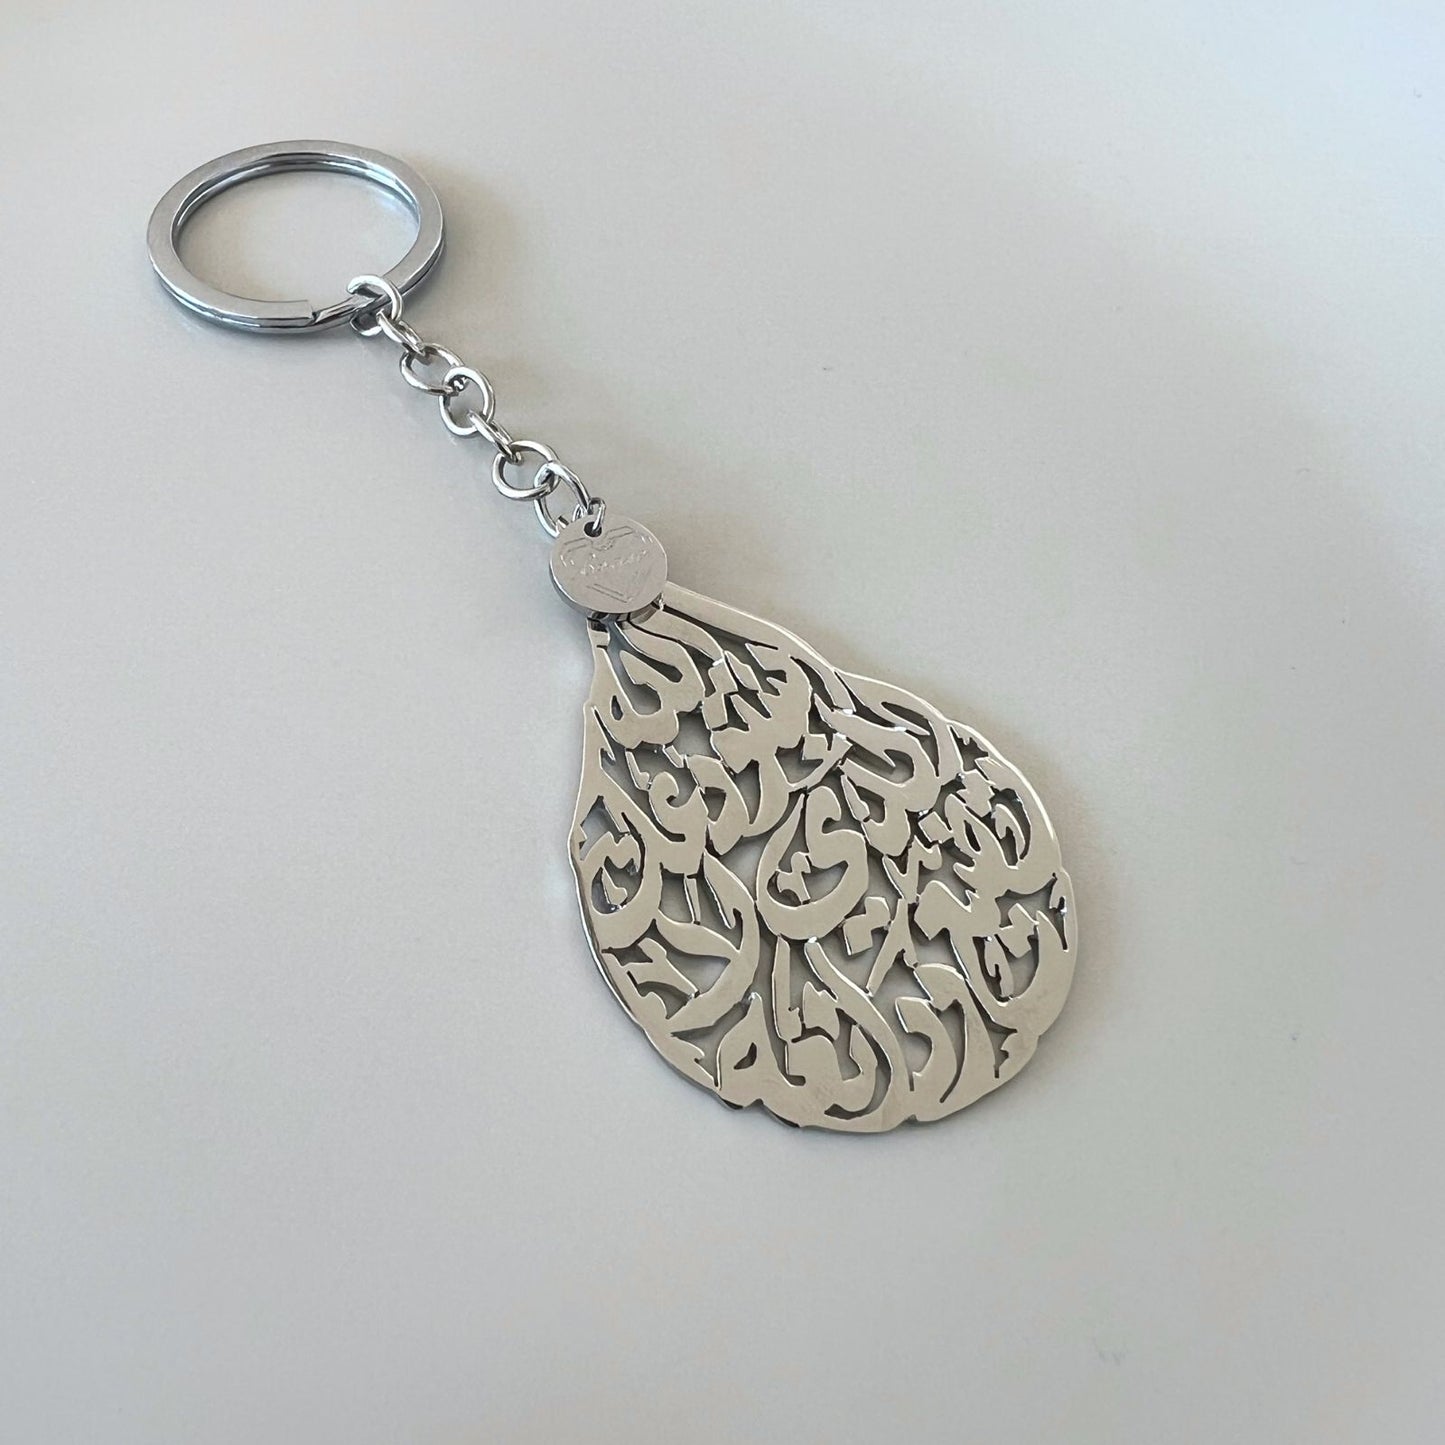 Customized Engraved Keychain